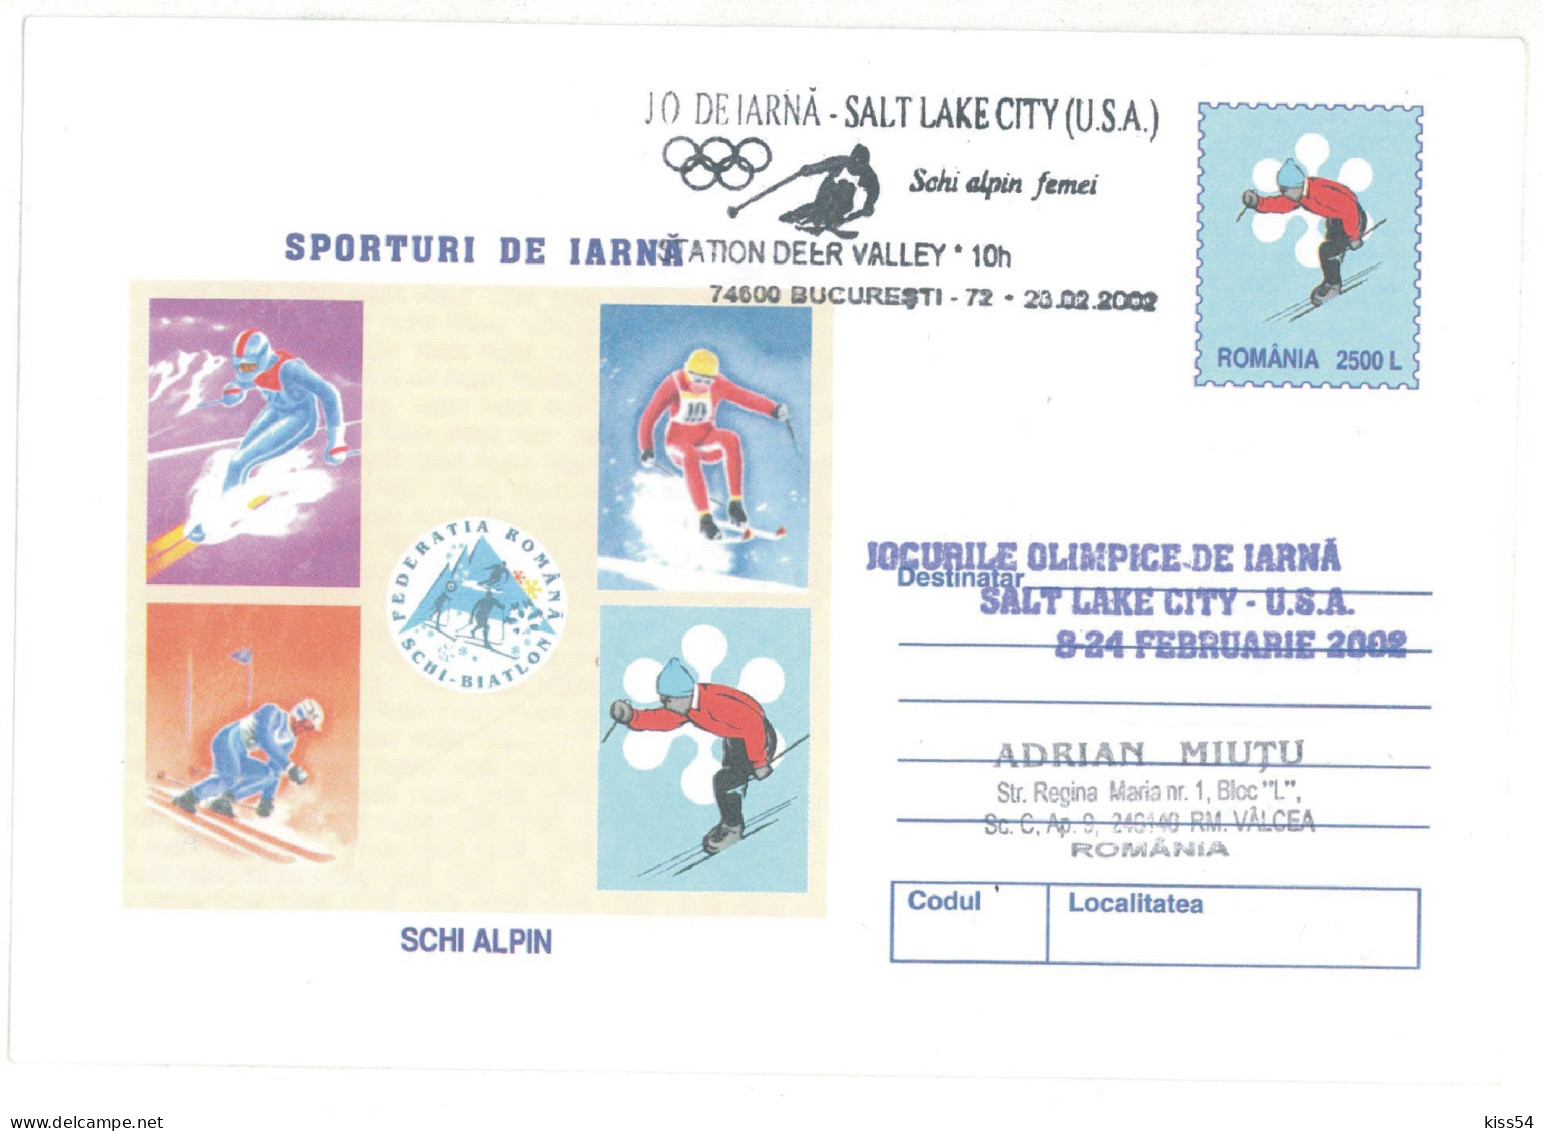 IP 2001 - 0233a U. S. A. SALT LAKE CITY 2002 - SKI Women - Winter Olympic Games - Stationery - Used - 2001 - Inverno2002: Salt Lake City